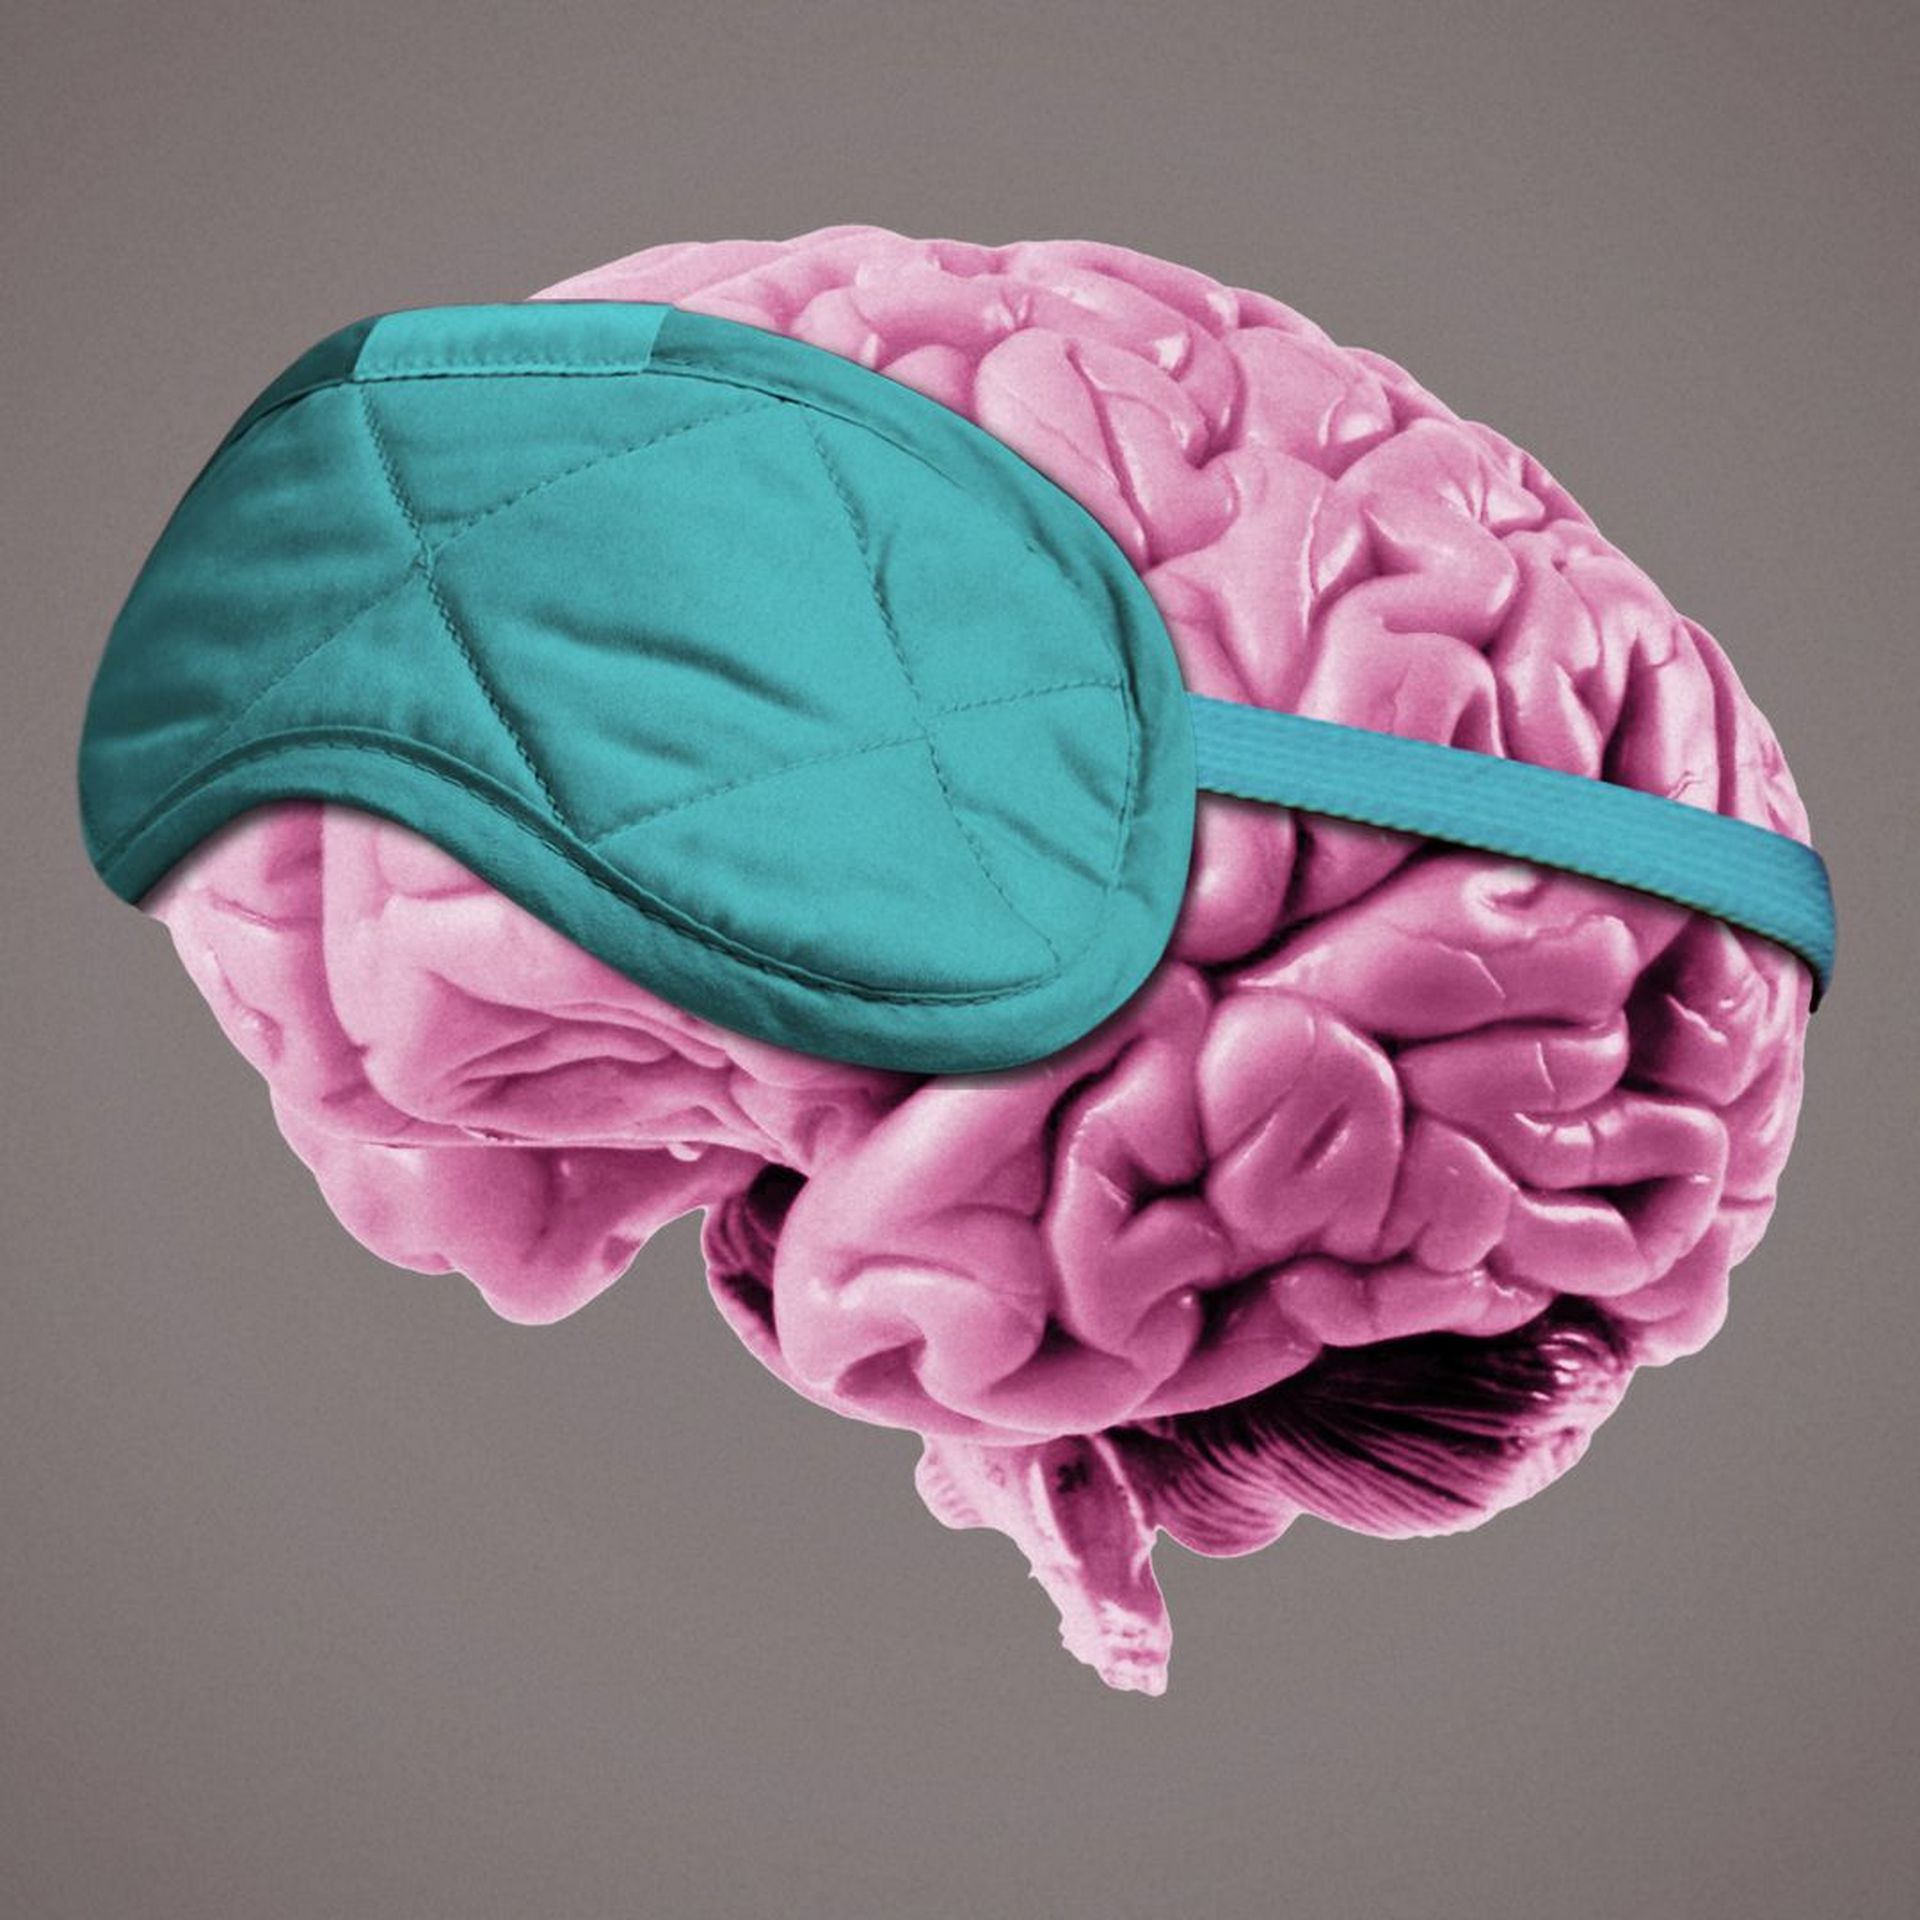 Illustration of a brain wearing a sleeping eye mask.